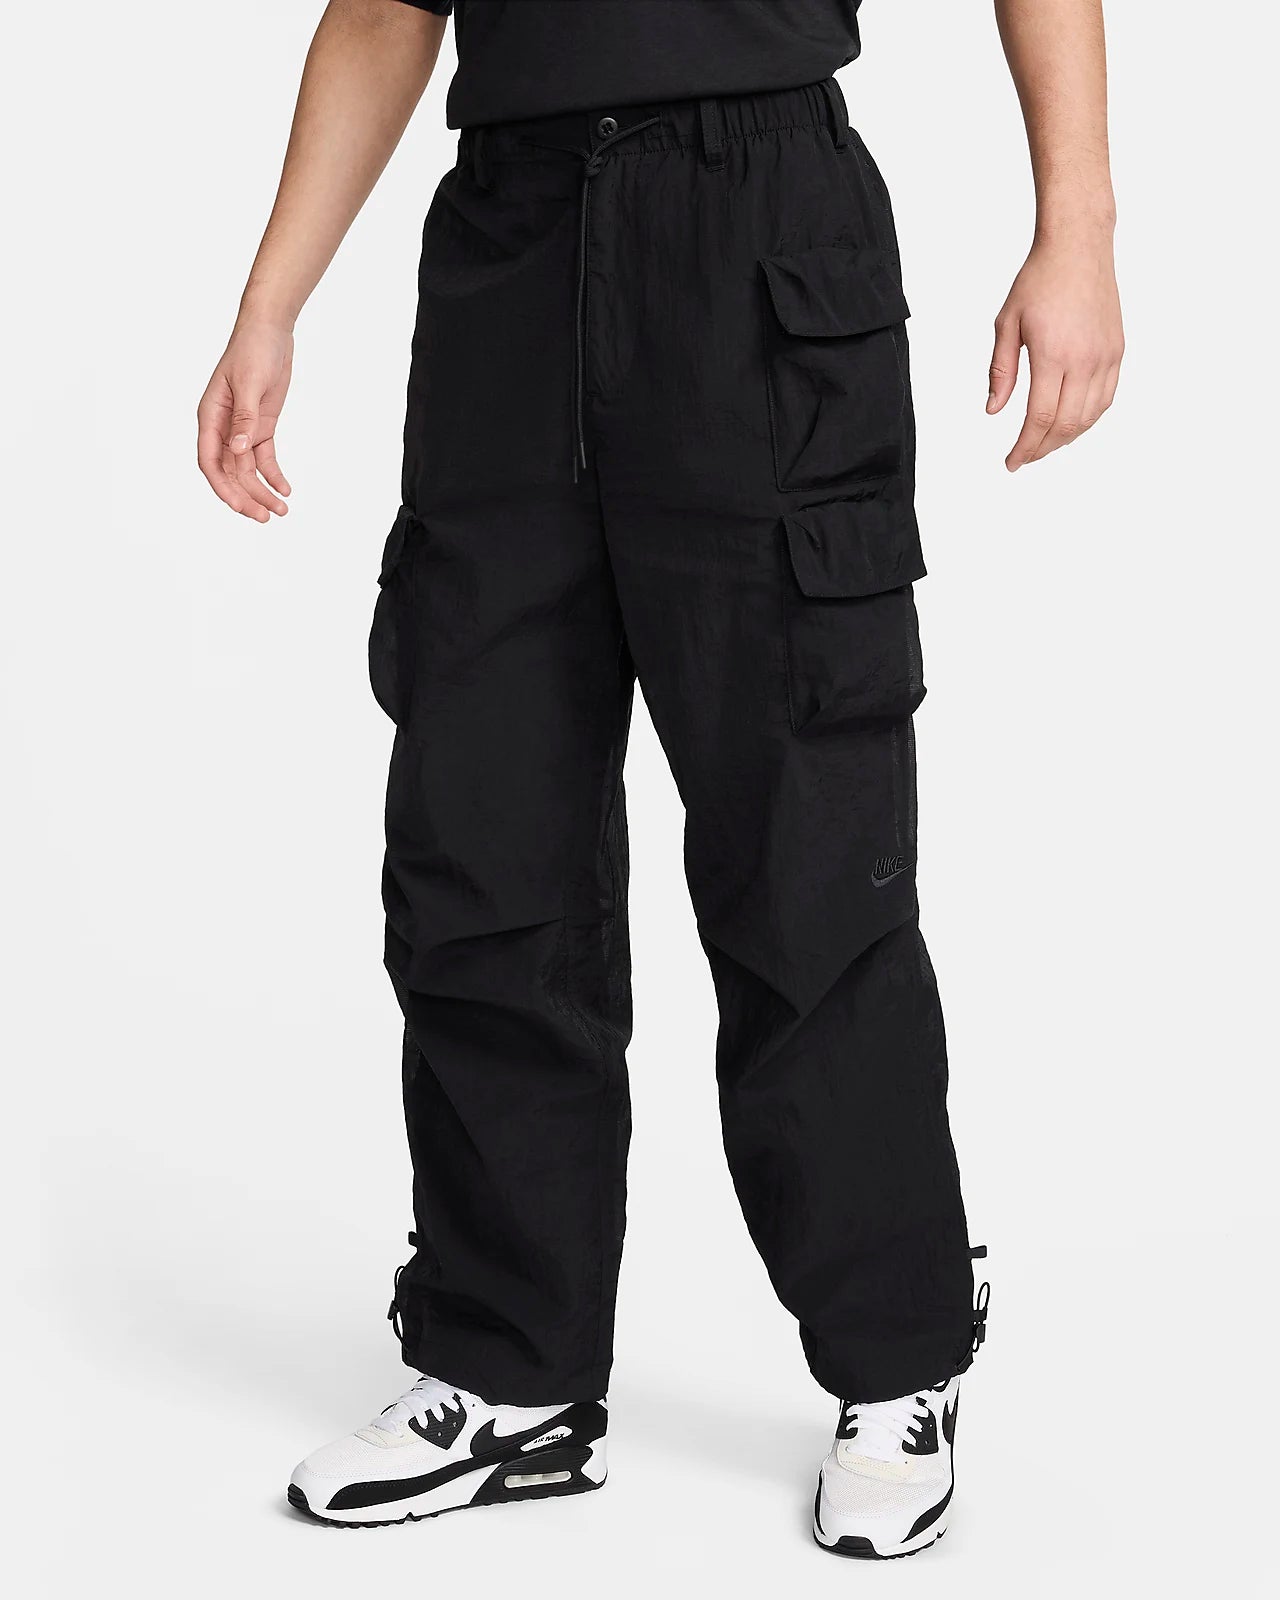 Nike Sportswear Tech Pack Woven Pant